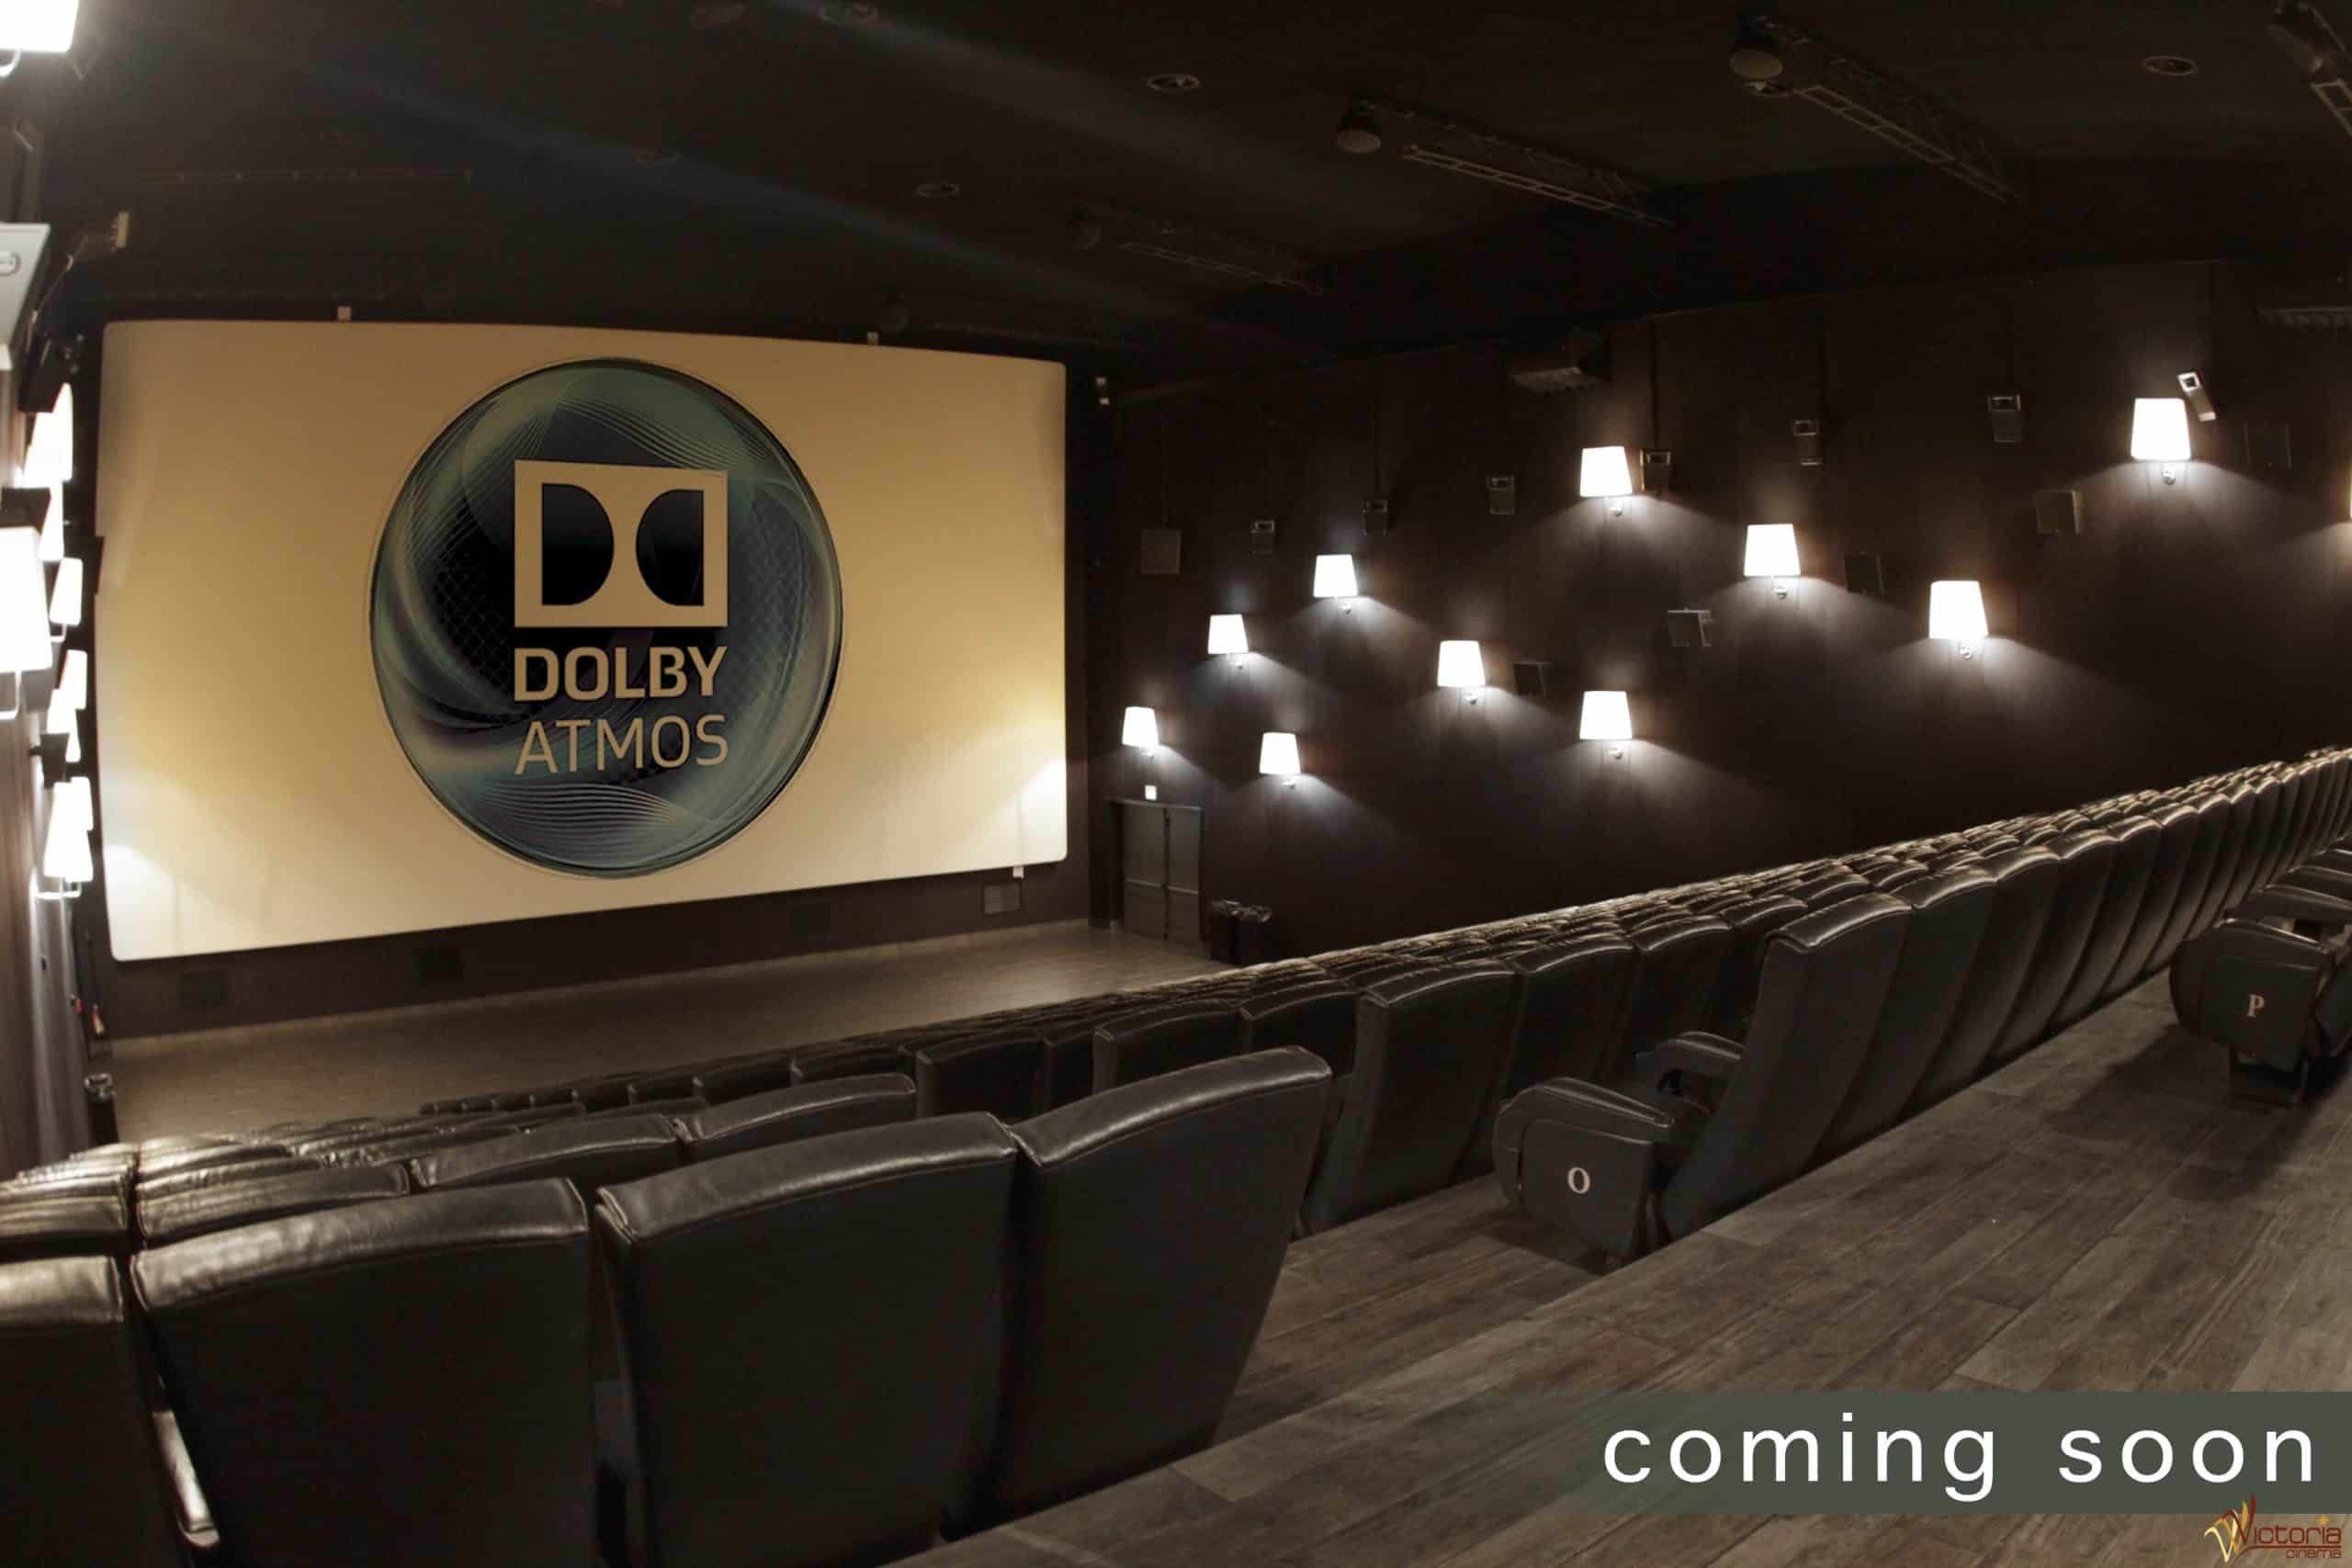 Cinema Victoria Modena: Blade Runner 2049 nella nuova sala Dolby Atmos